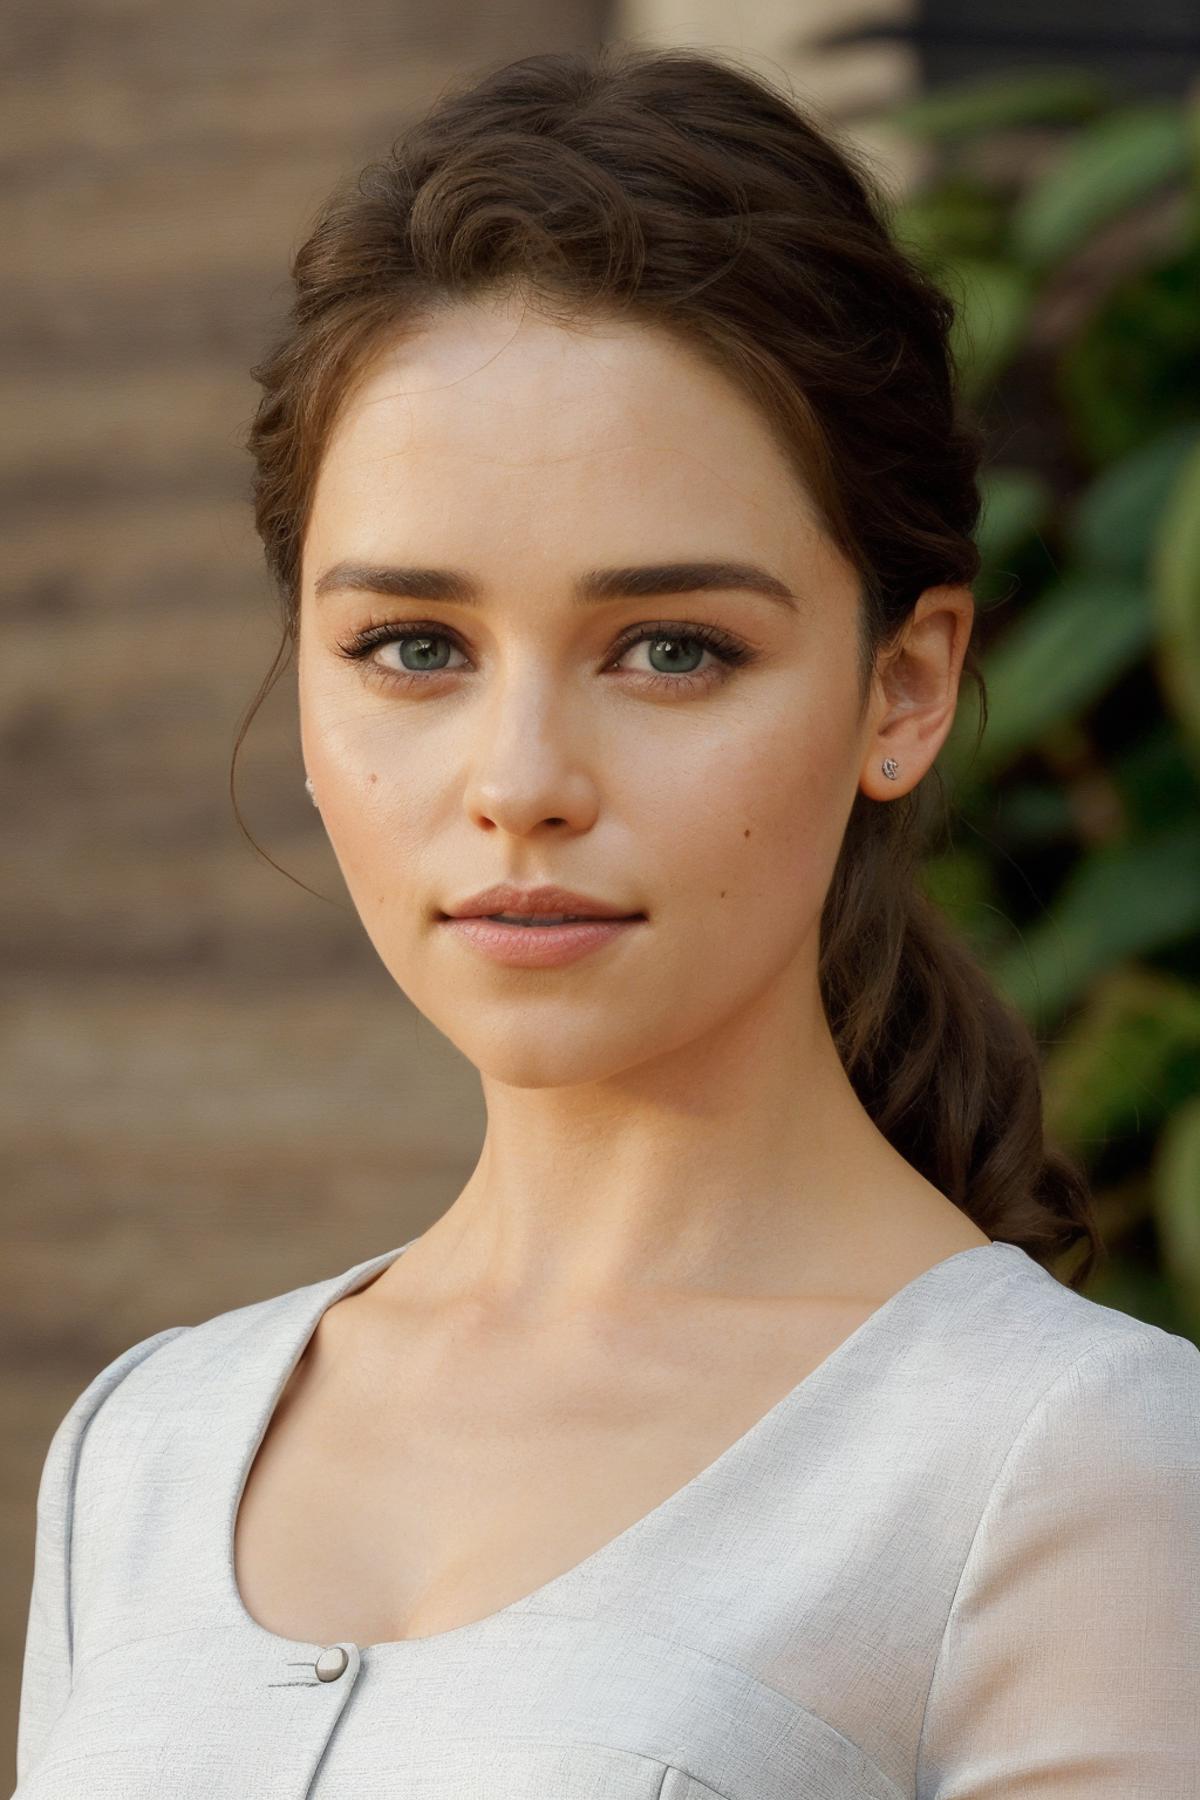 Emilia Clarke / Daenerys Targaryen image by __2_